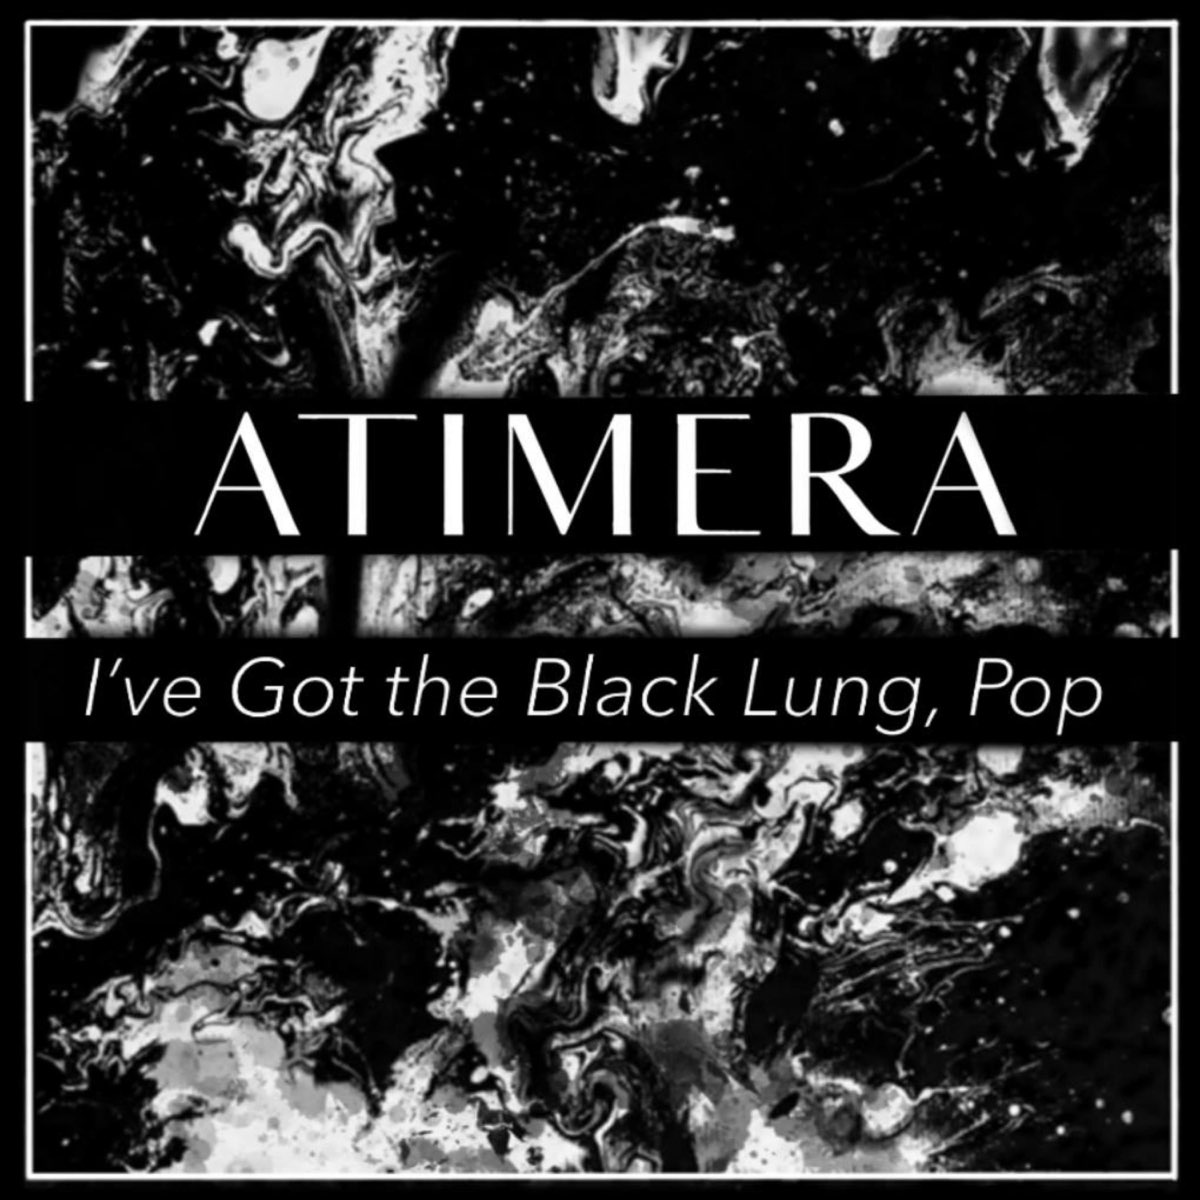 I've Got the Black Lung, Pop - Single - Album by Atimera - Apple Music